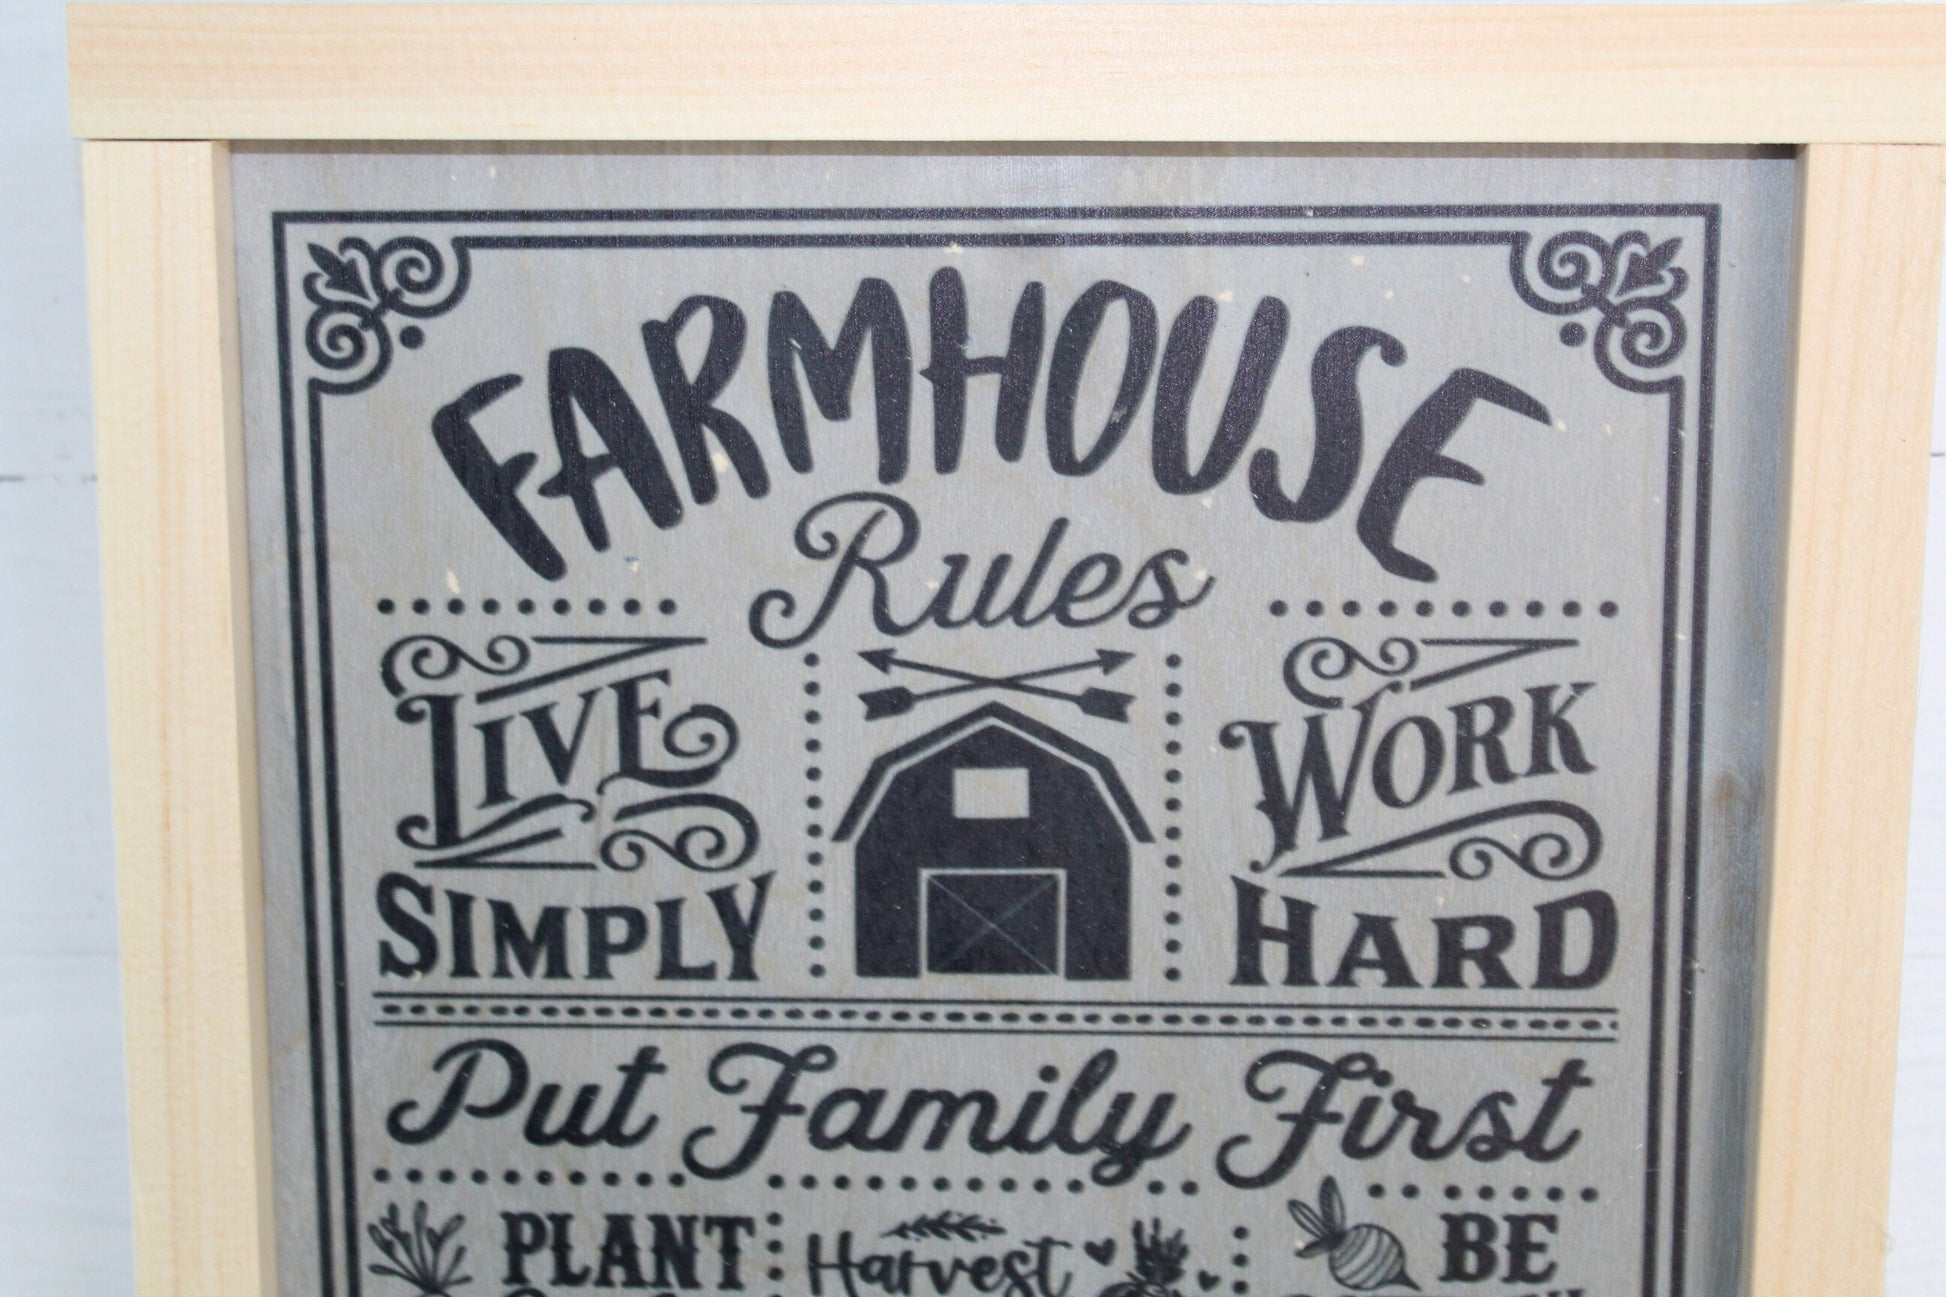 Farmhouse Rules List Wood Sign Farmer Farm Barn Plant Harvest Cow Wall Hanging Simply Work Hard Decoration Standard Principles Rustic Code